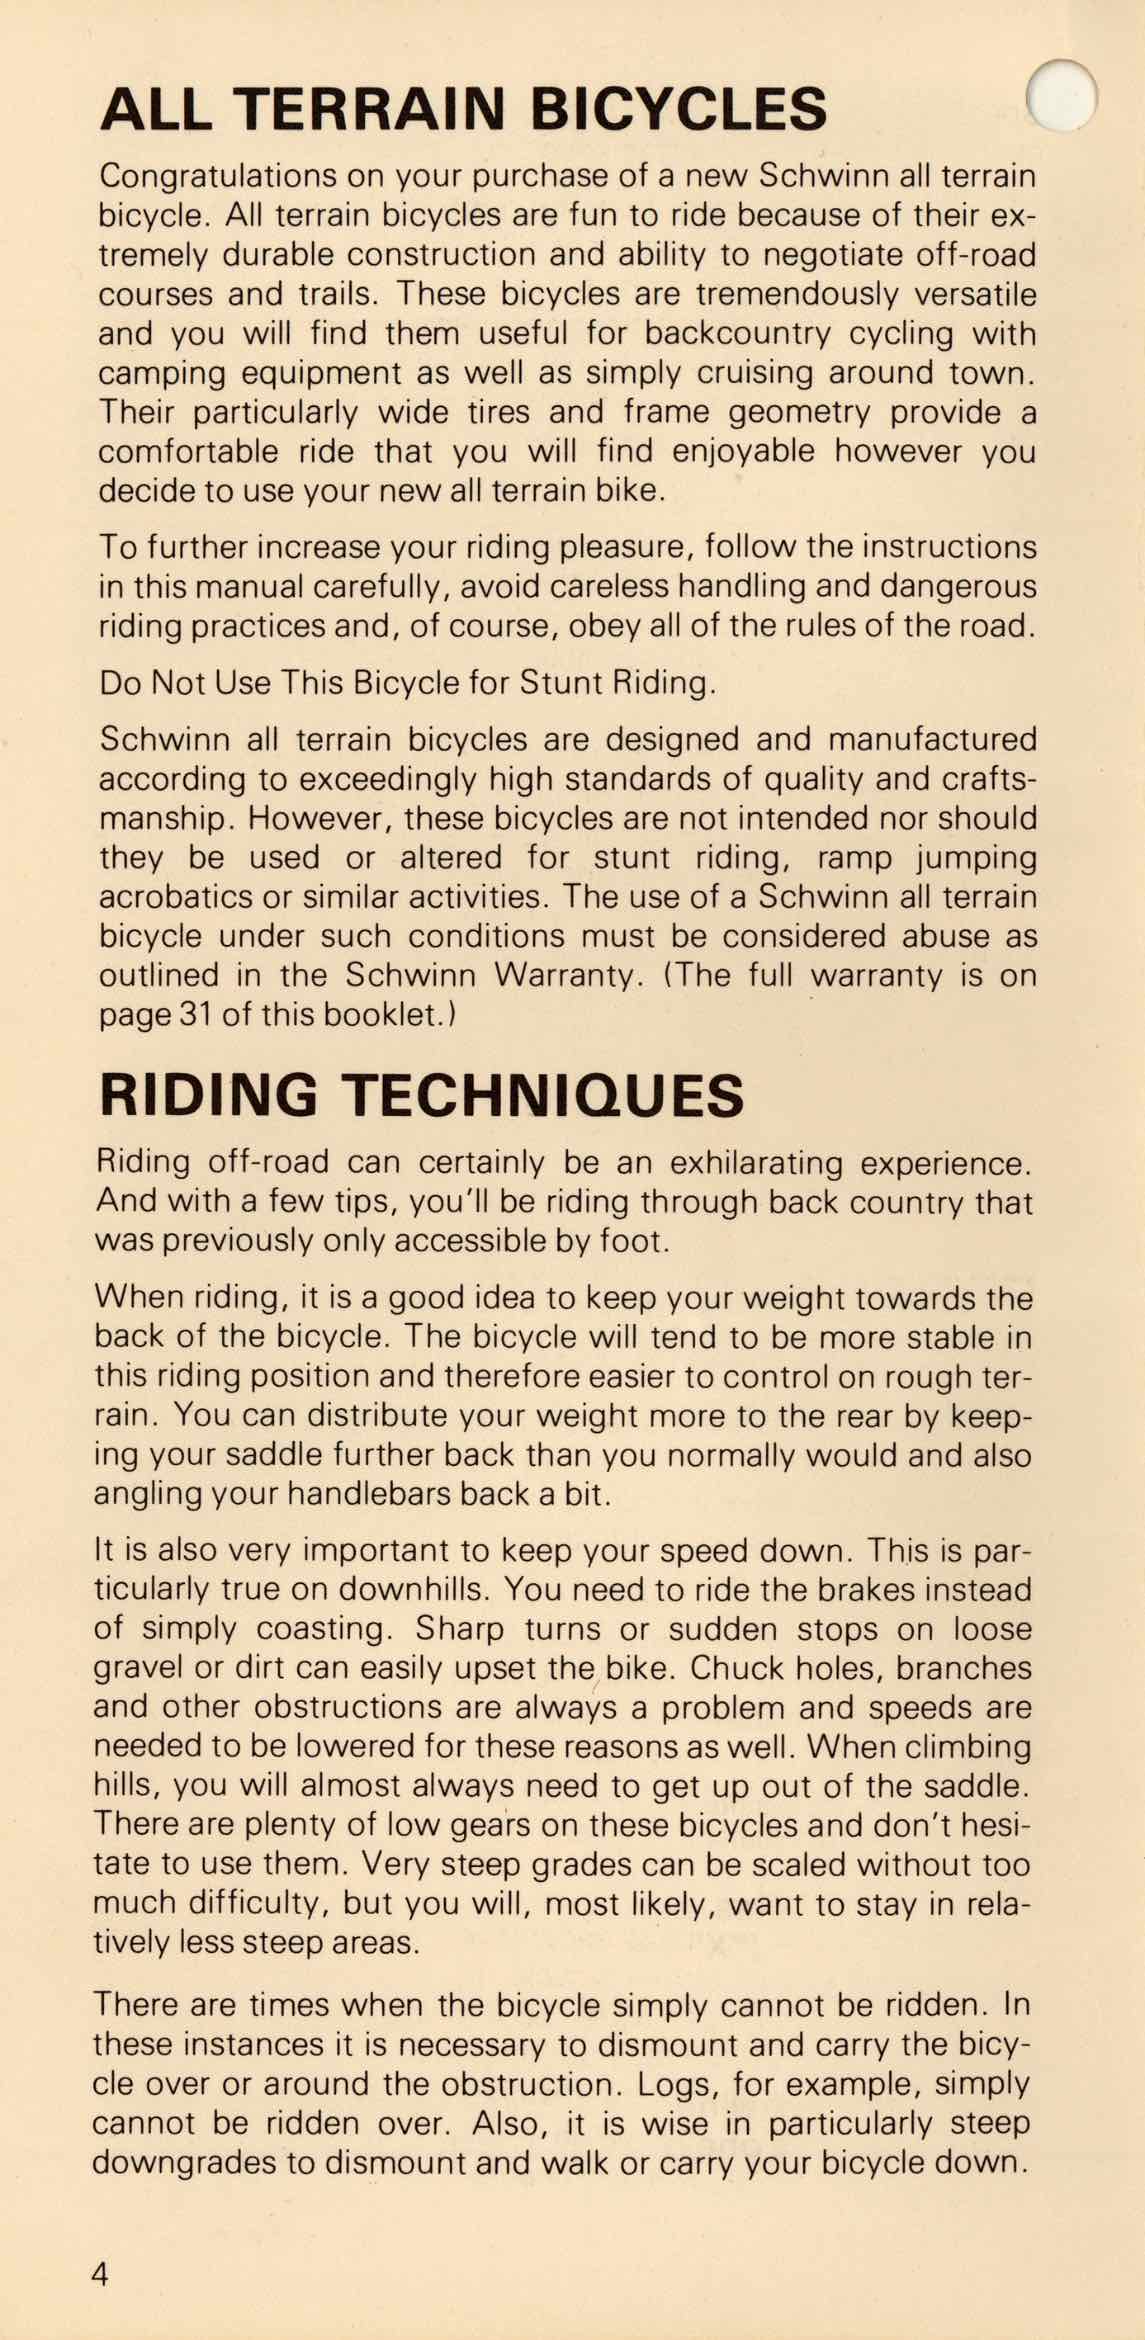 Schwinn All Terrain Bicycles - page 4 main image